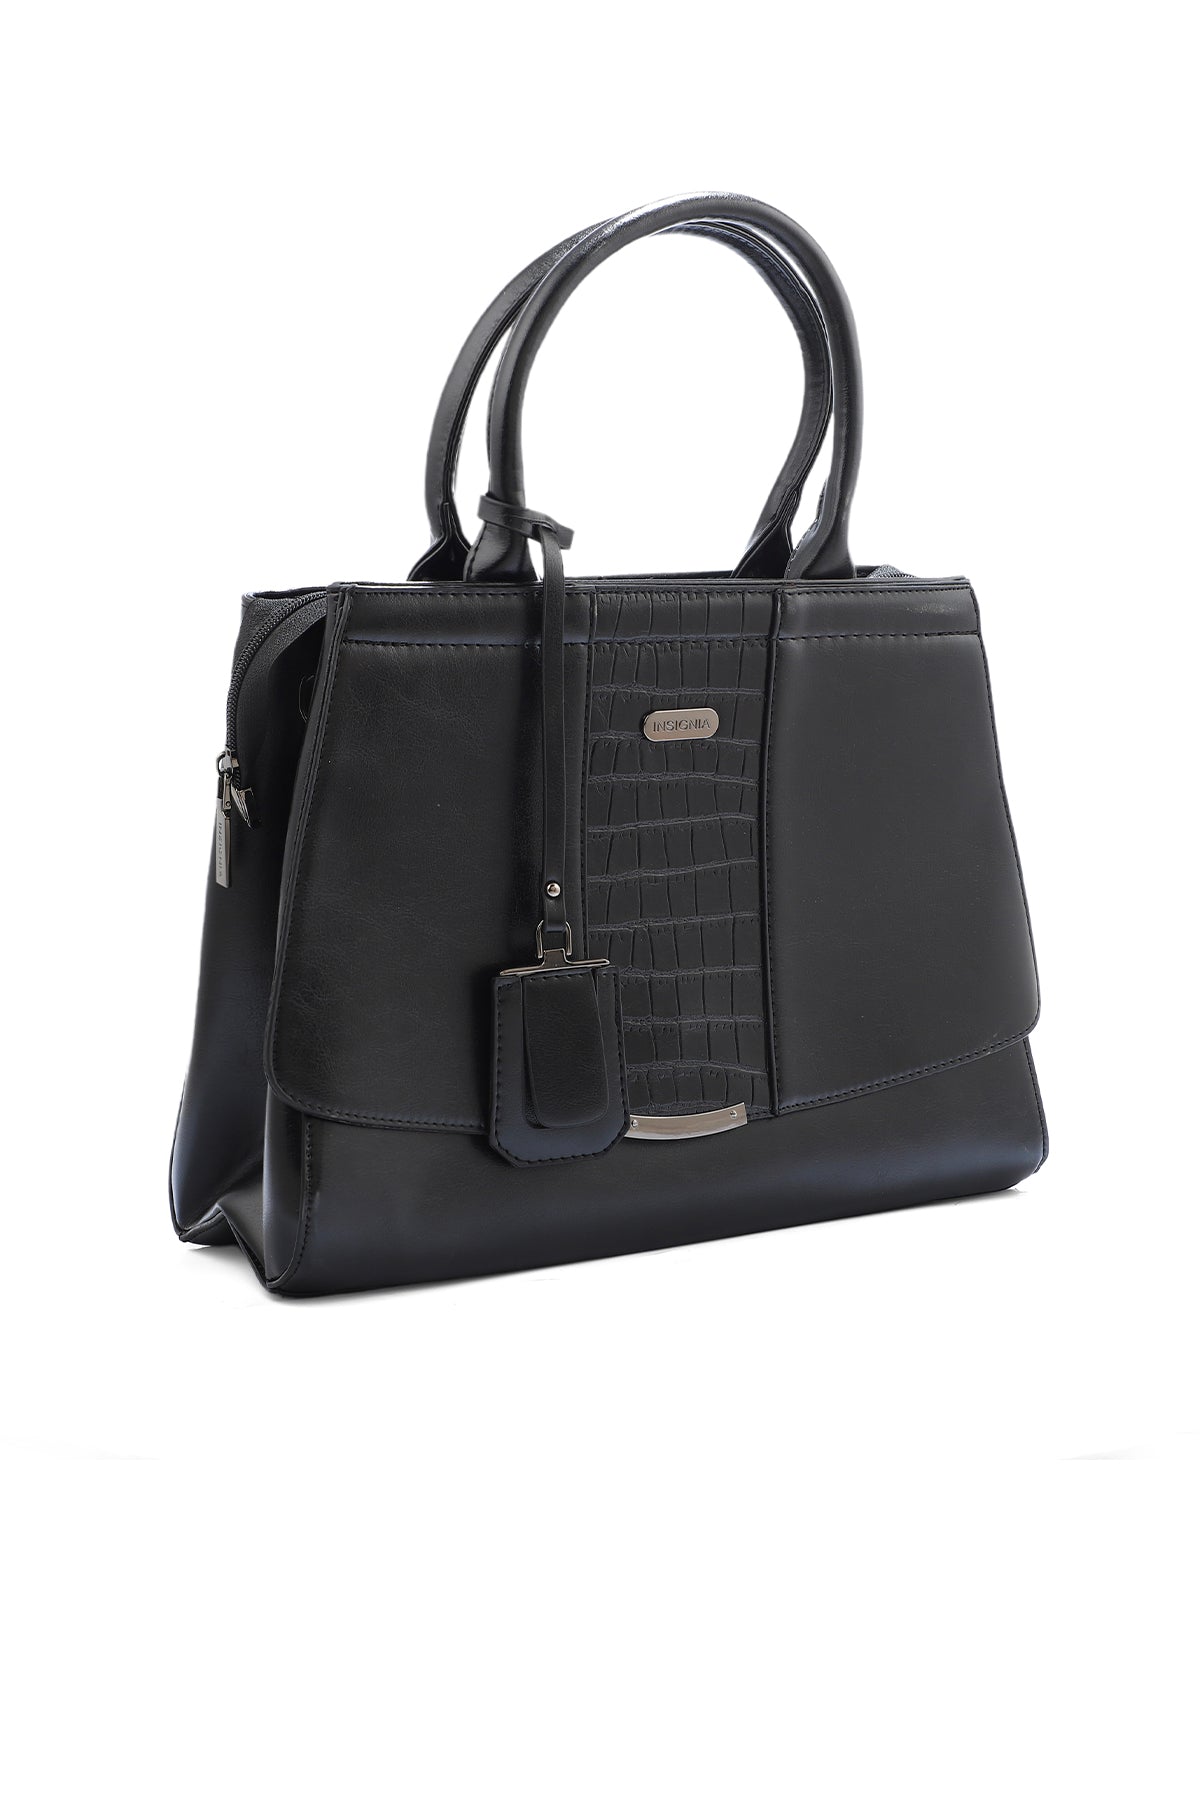 Formal Tote Hand Bags B14971-Black